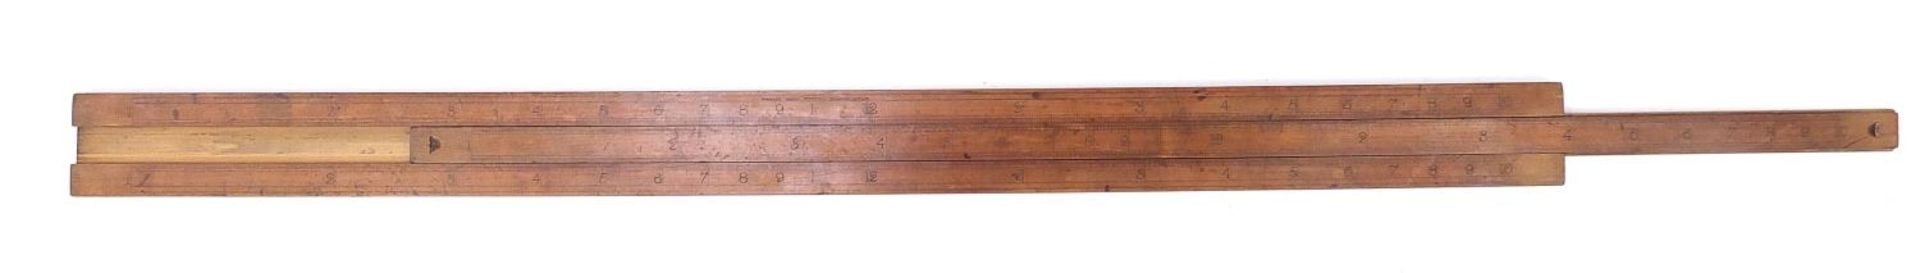 Antique Stanley boxwood three foot sliding rule impressed Stanley Great Turnstile Holborn London, - Image 4 of 14